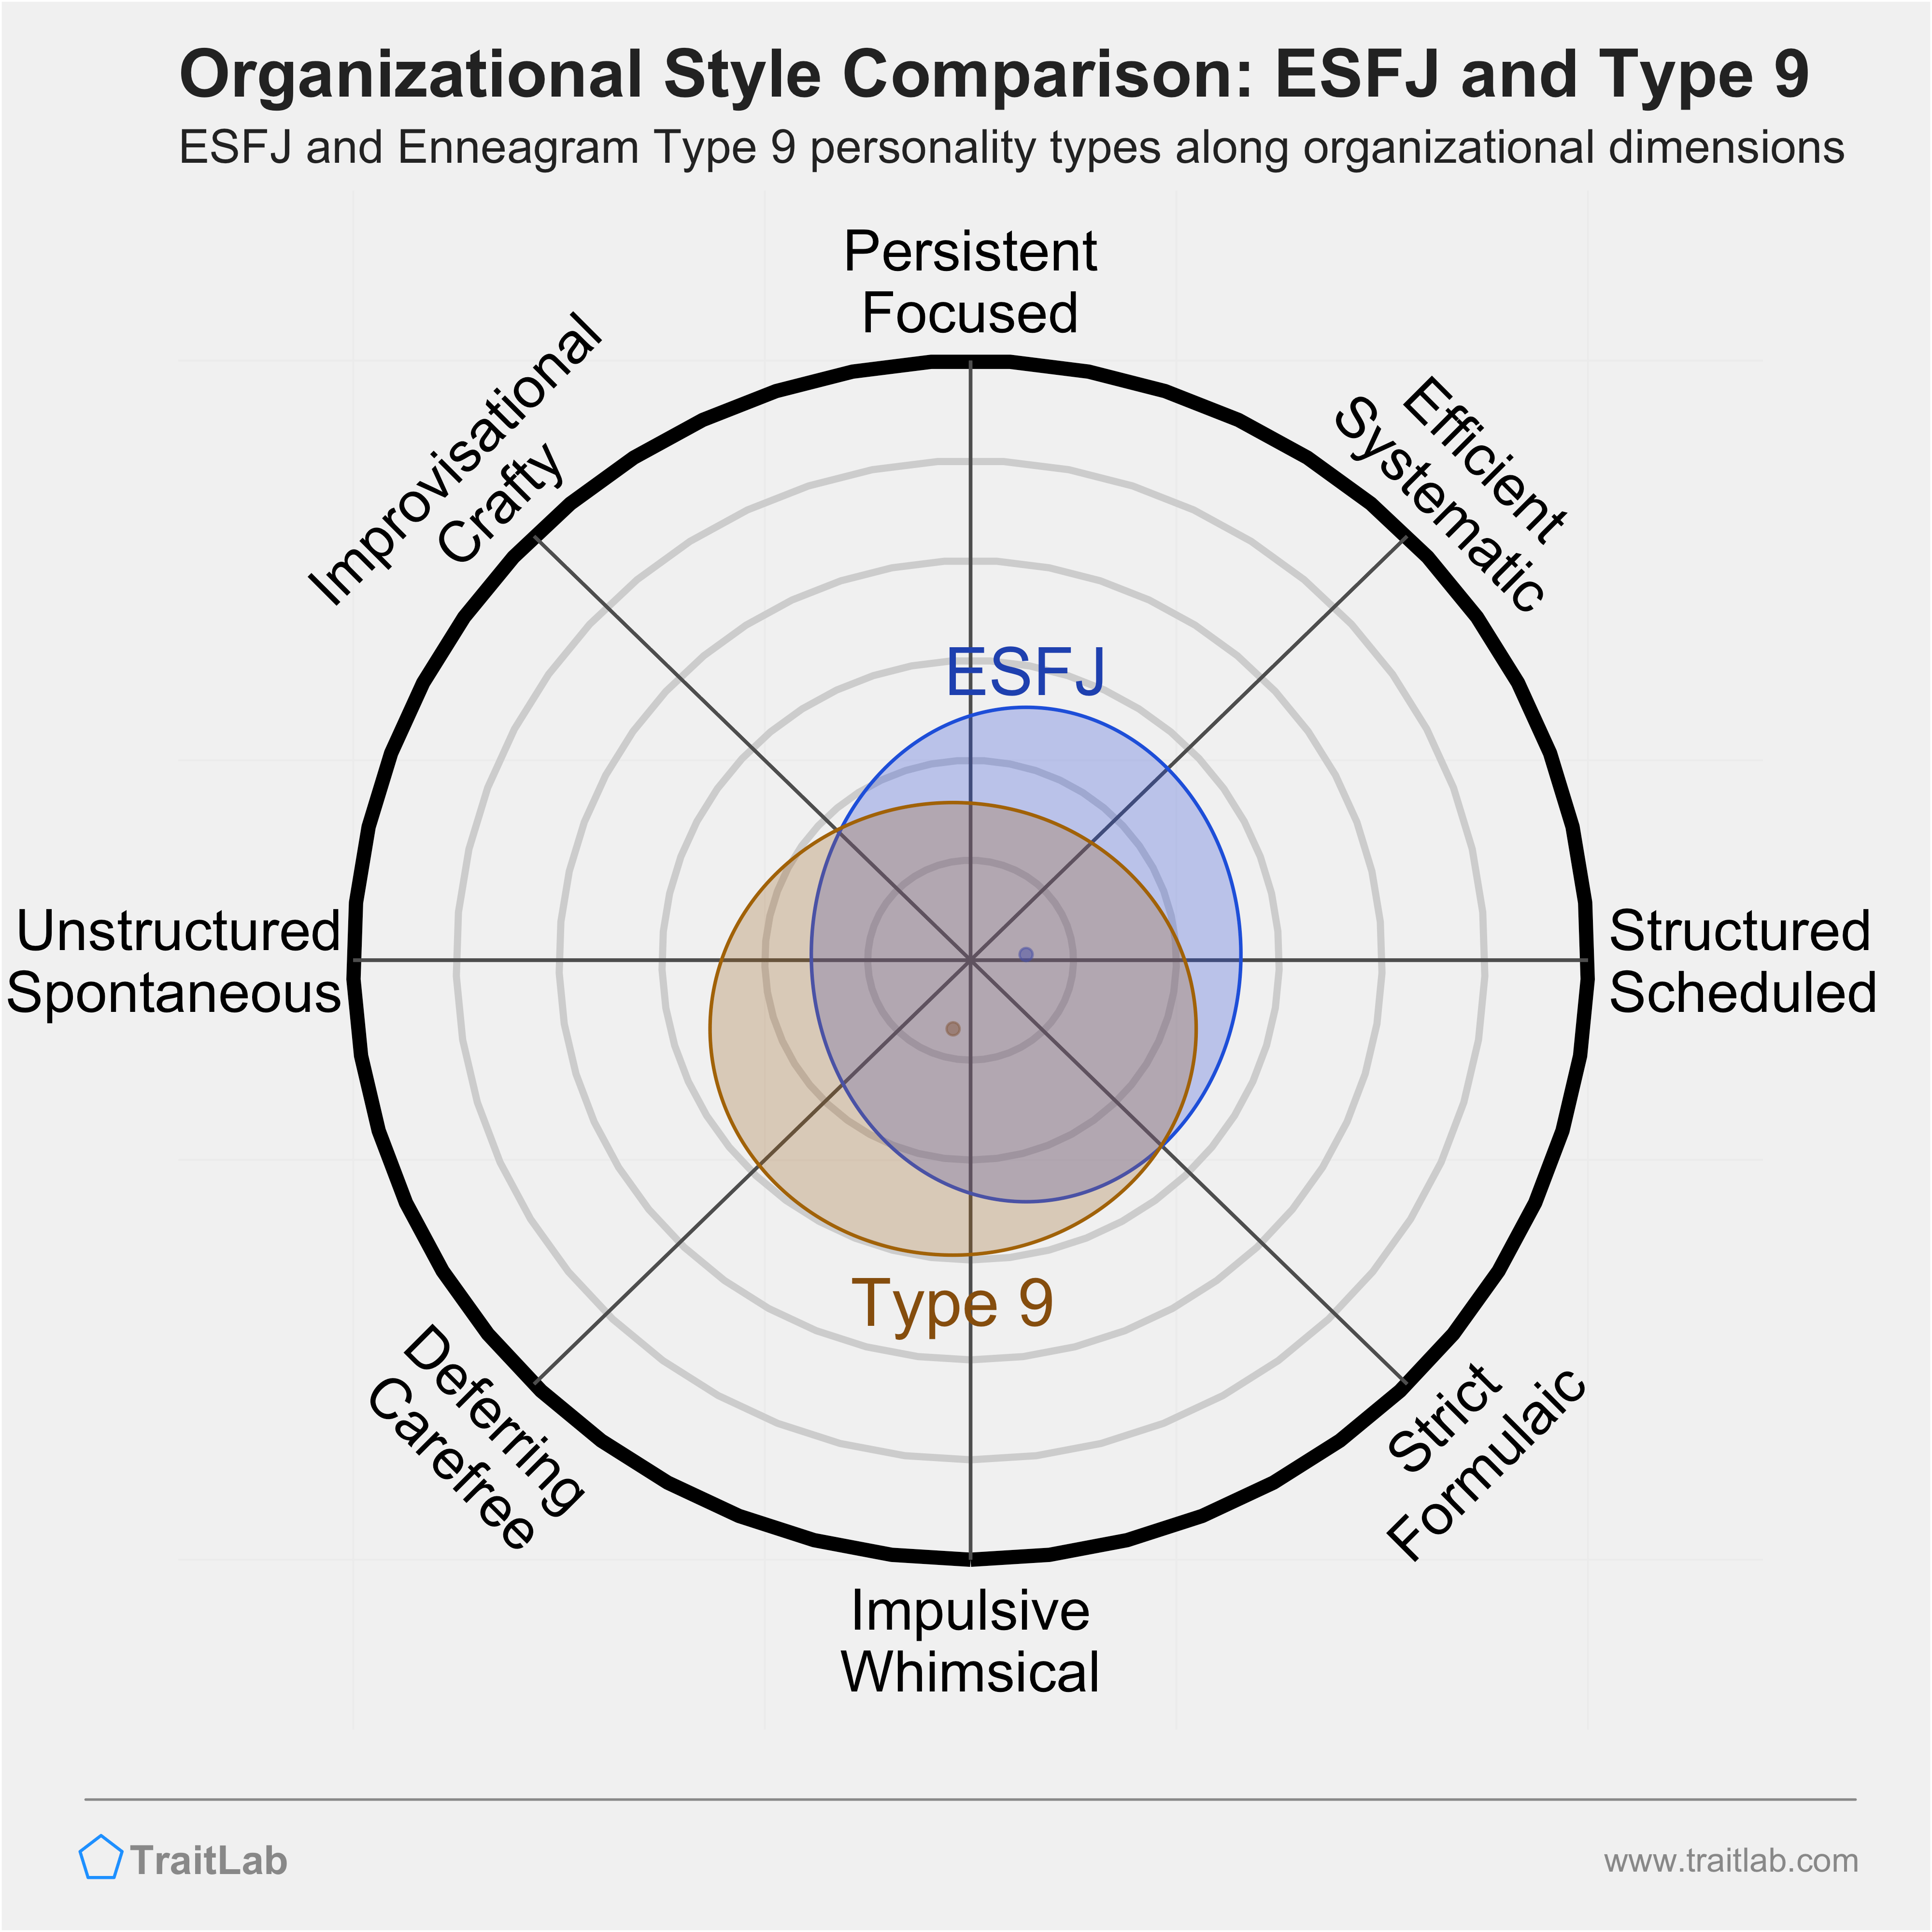 ESFJ and Type 9 comparison across organizational dimensions